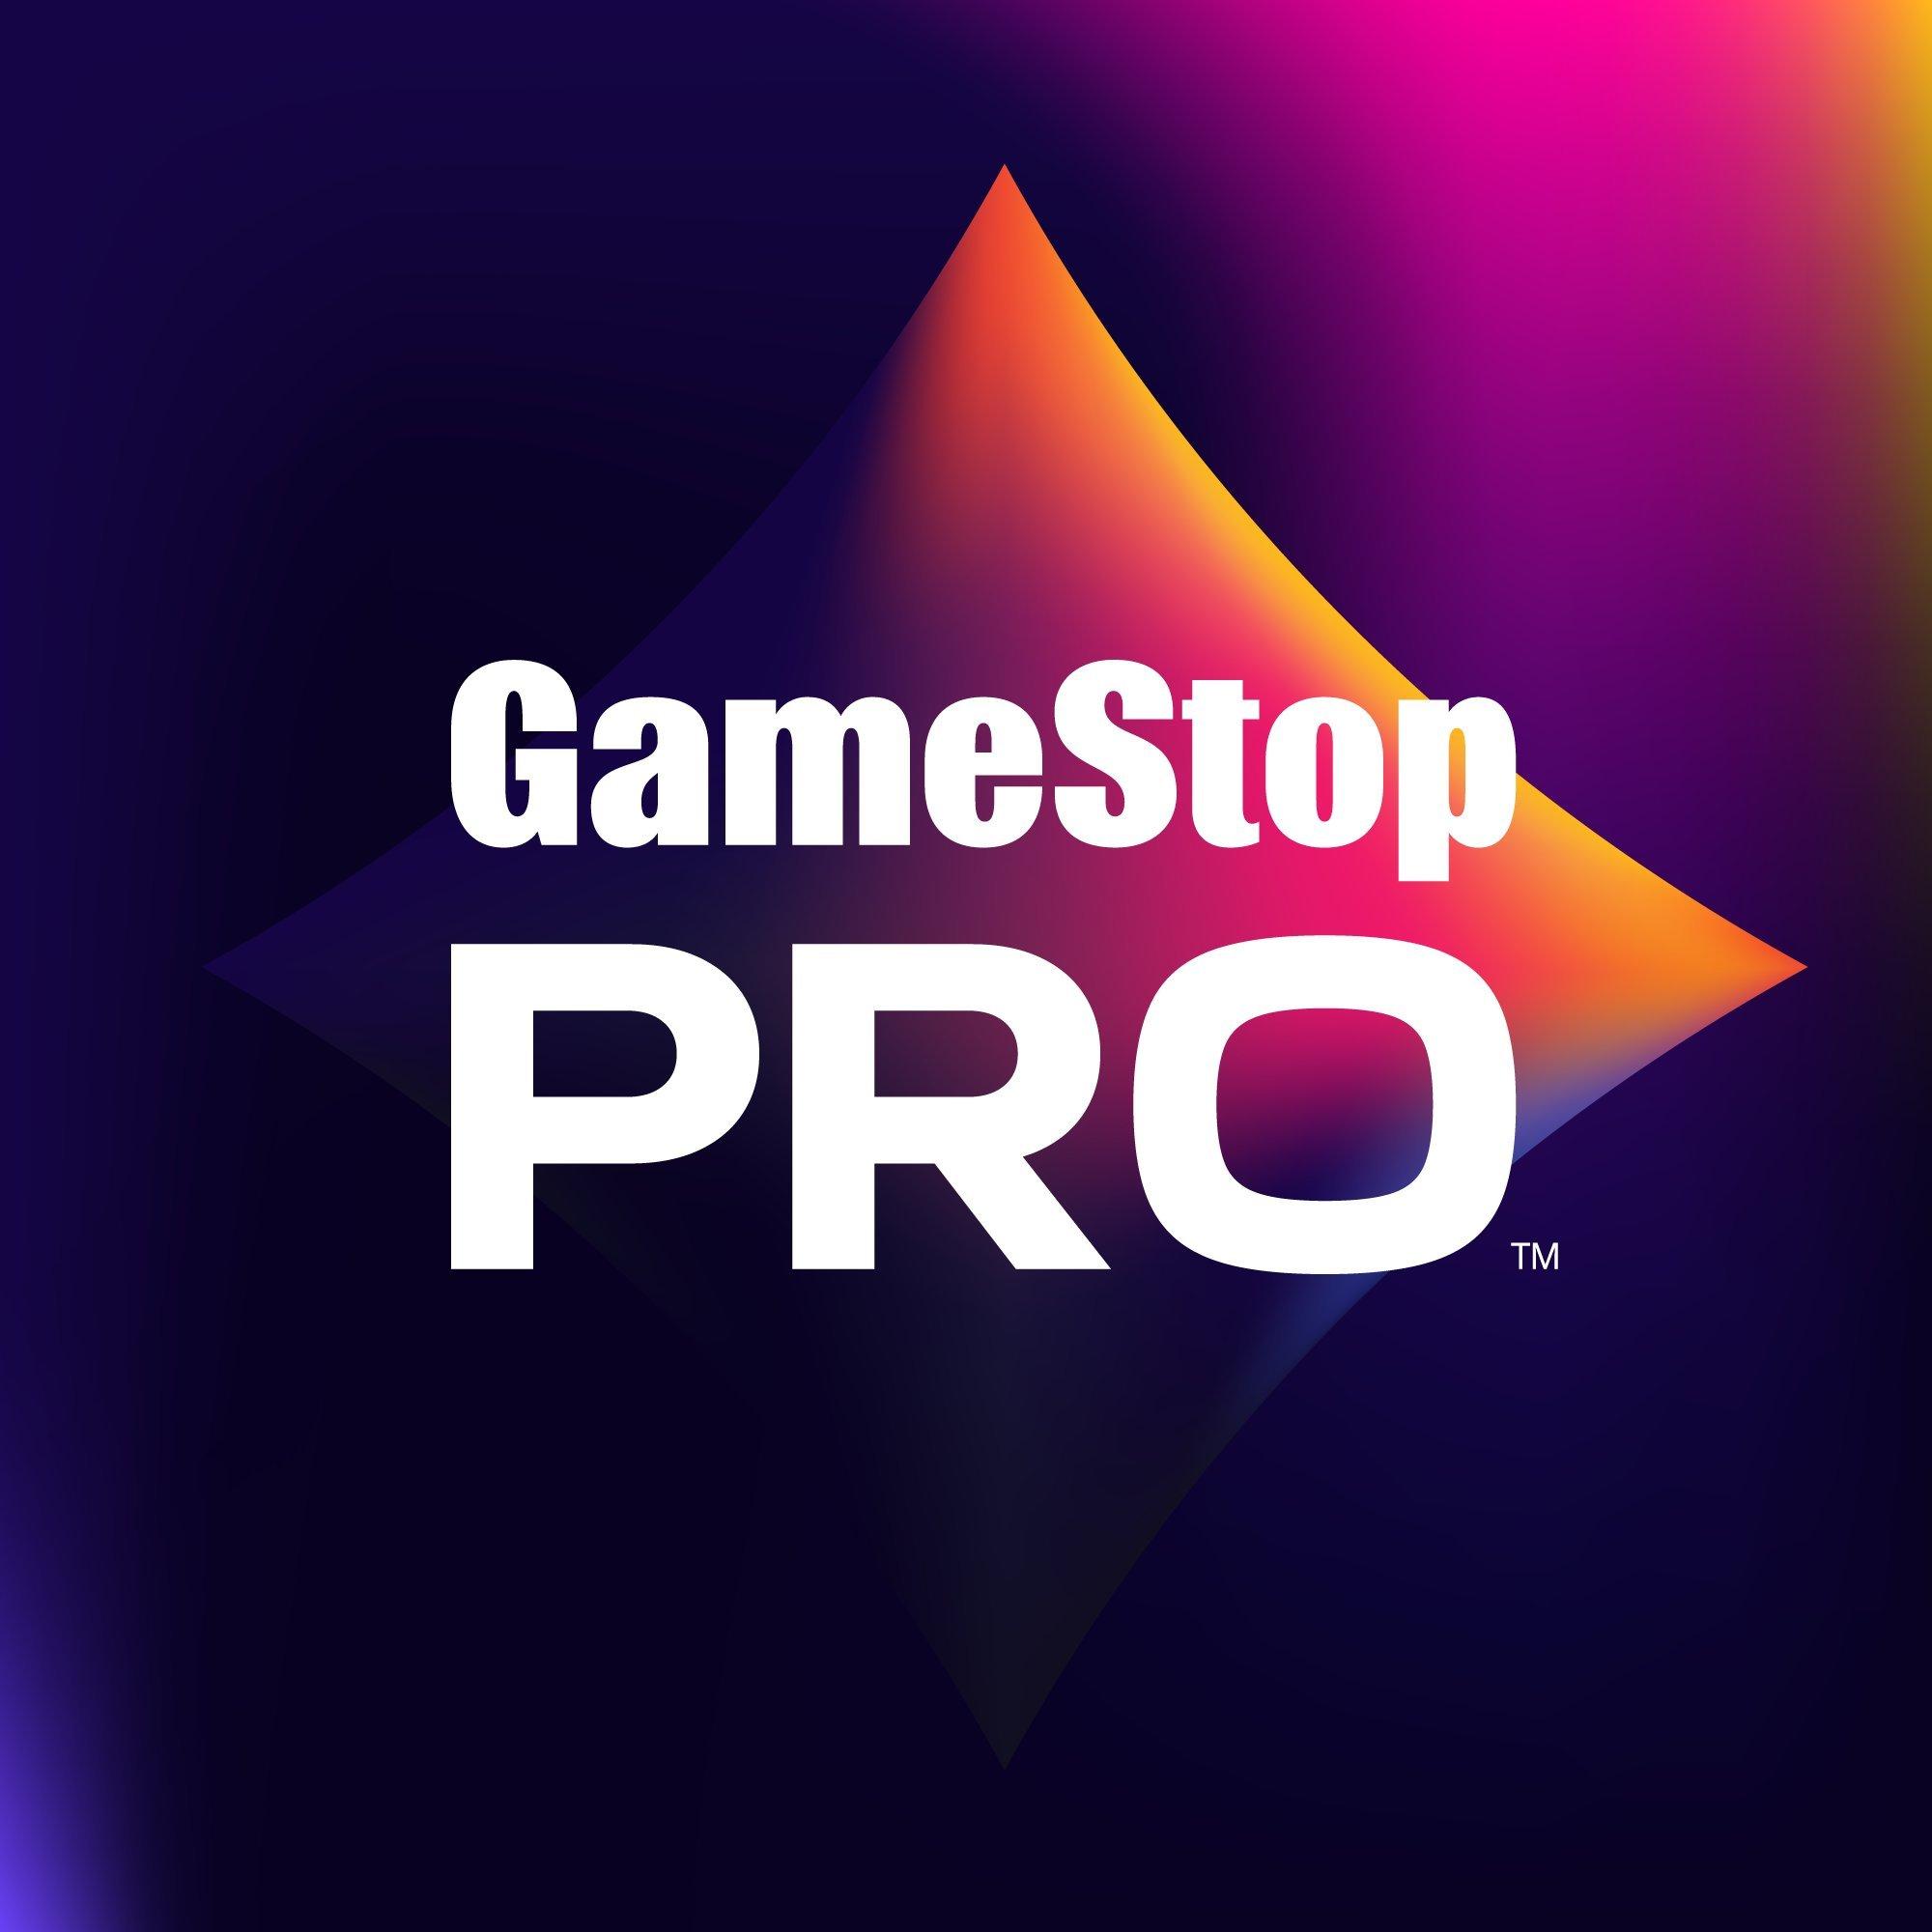 GameStop Pro Pro GameStop